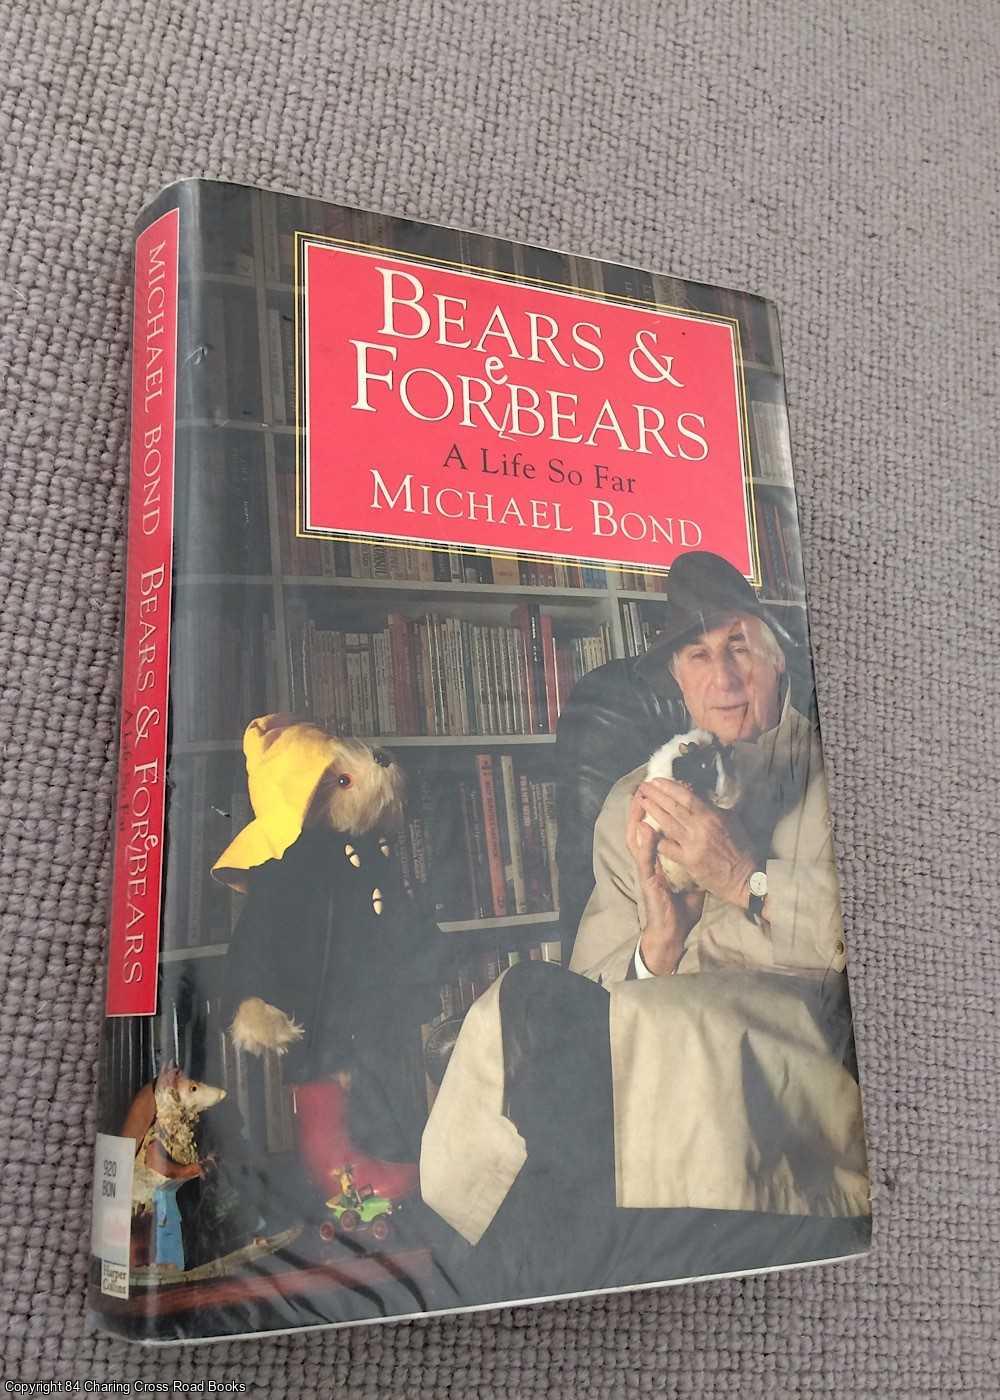 Bond, Michael - Bears and Forebears: A Life So Far